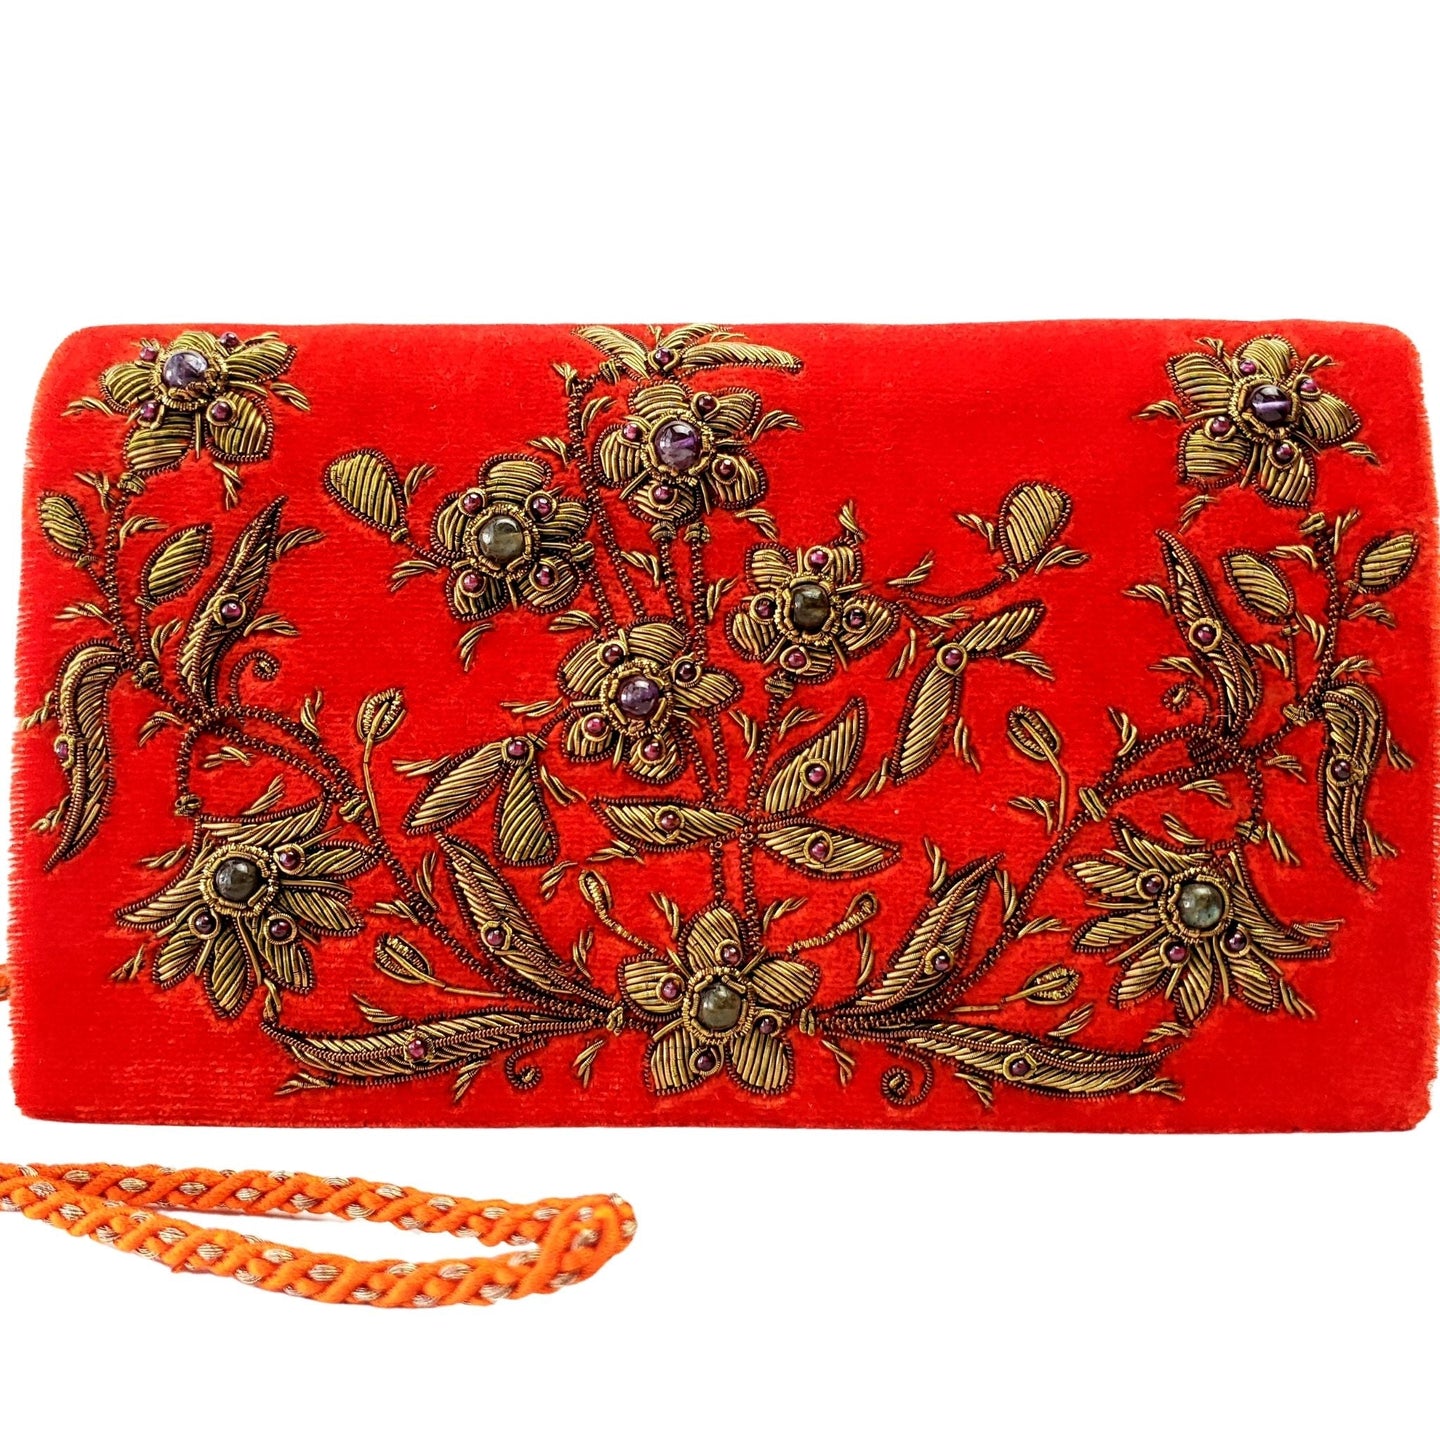 Orange velvet luxury designer clutch embroidered with antique gold flowers inlaid with gemstones. 